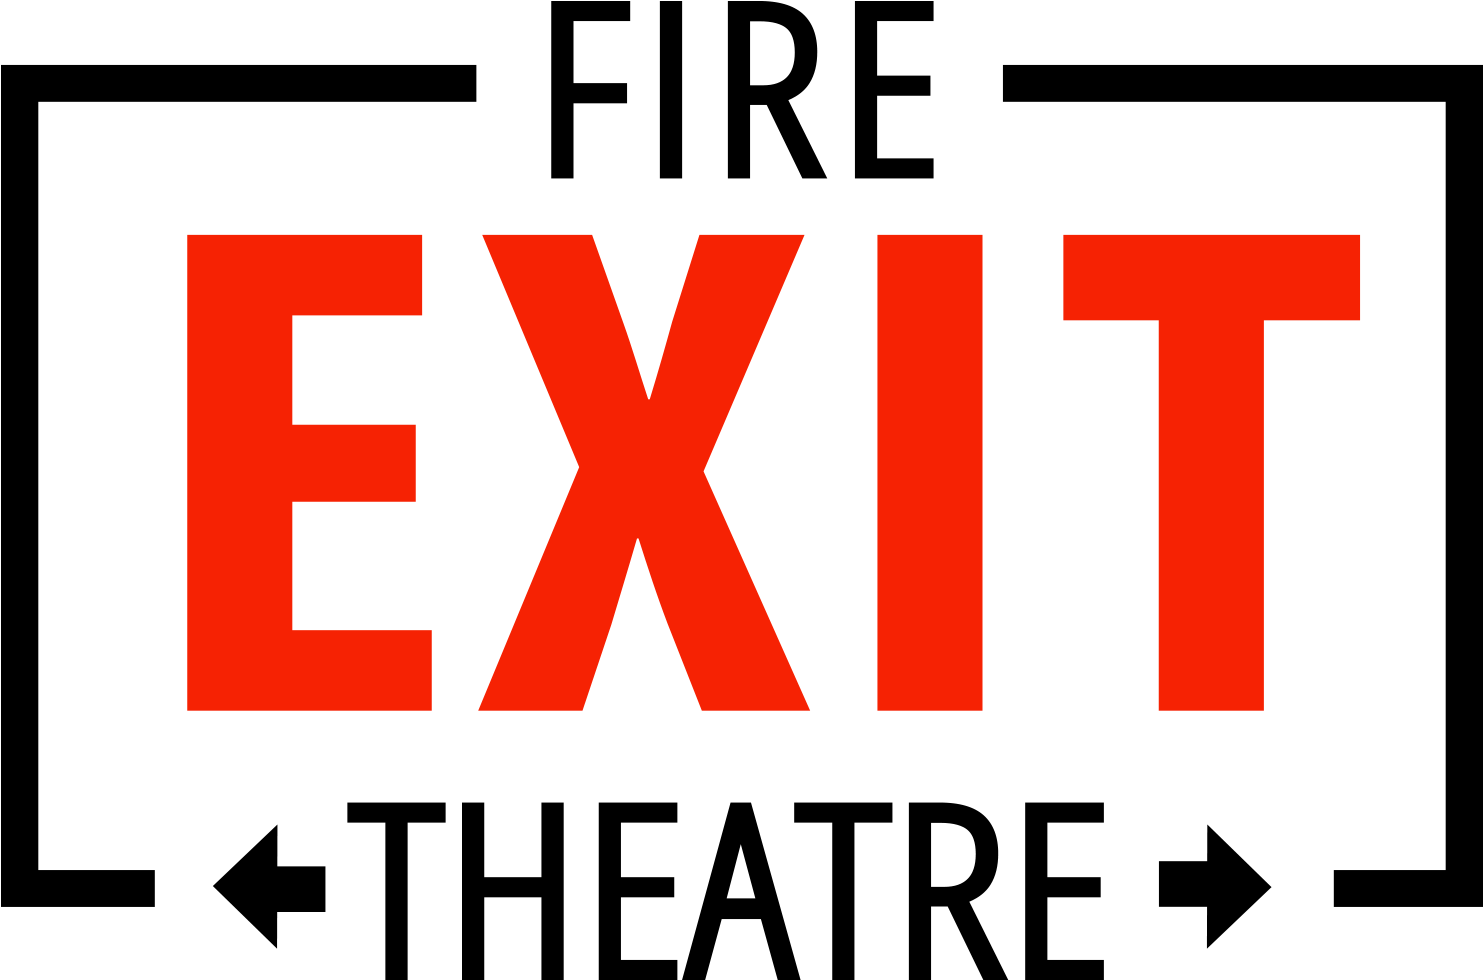 Fire Exit Theatre Logo (1500x1500)